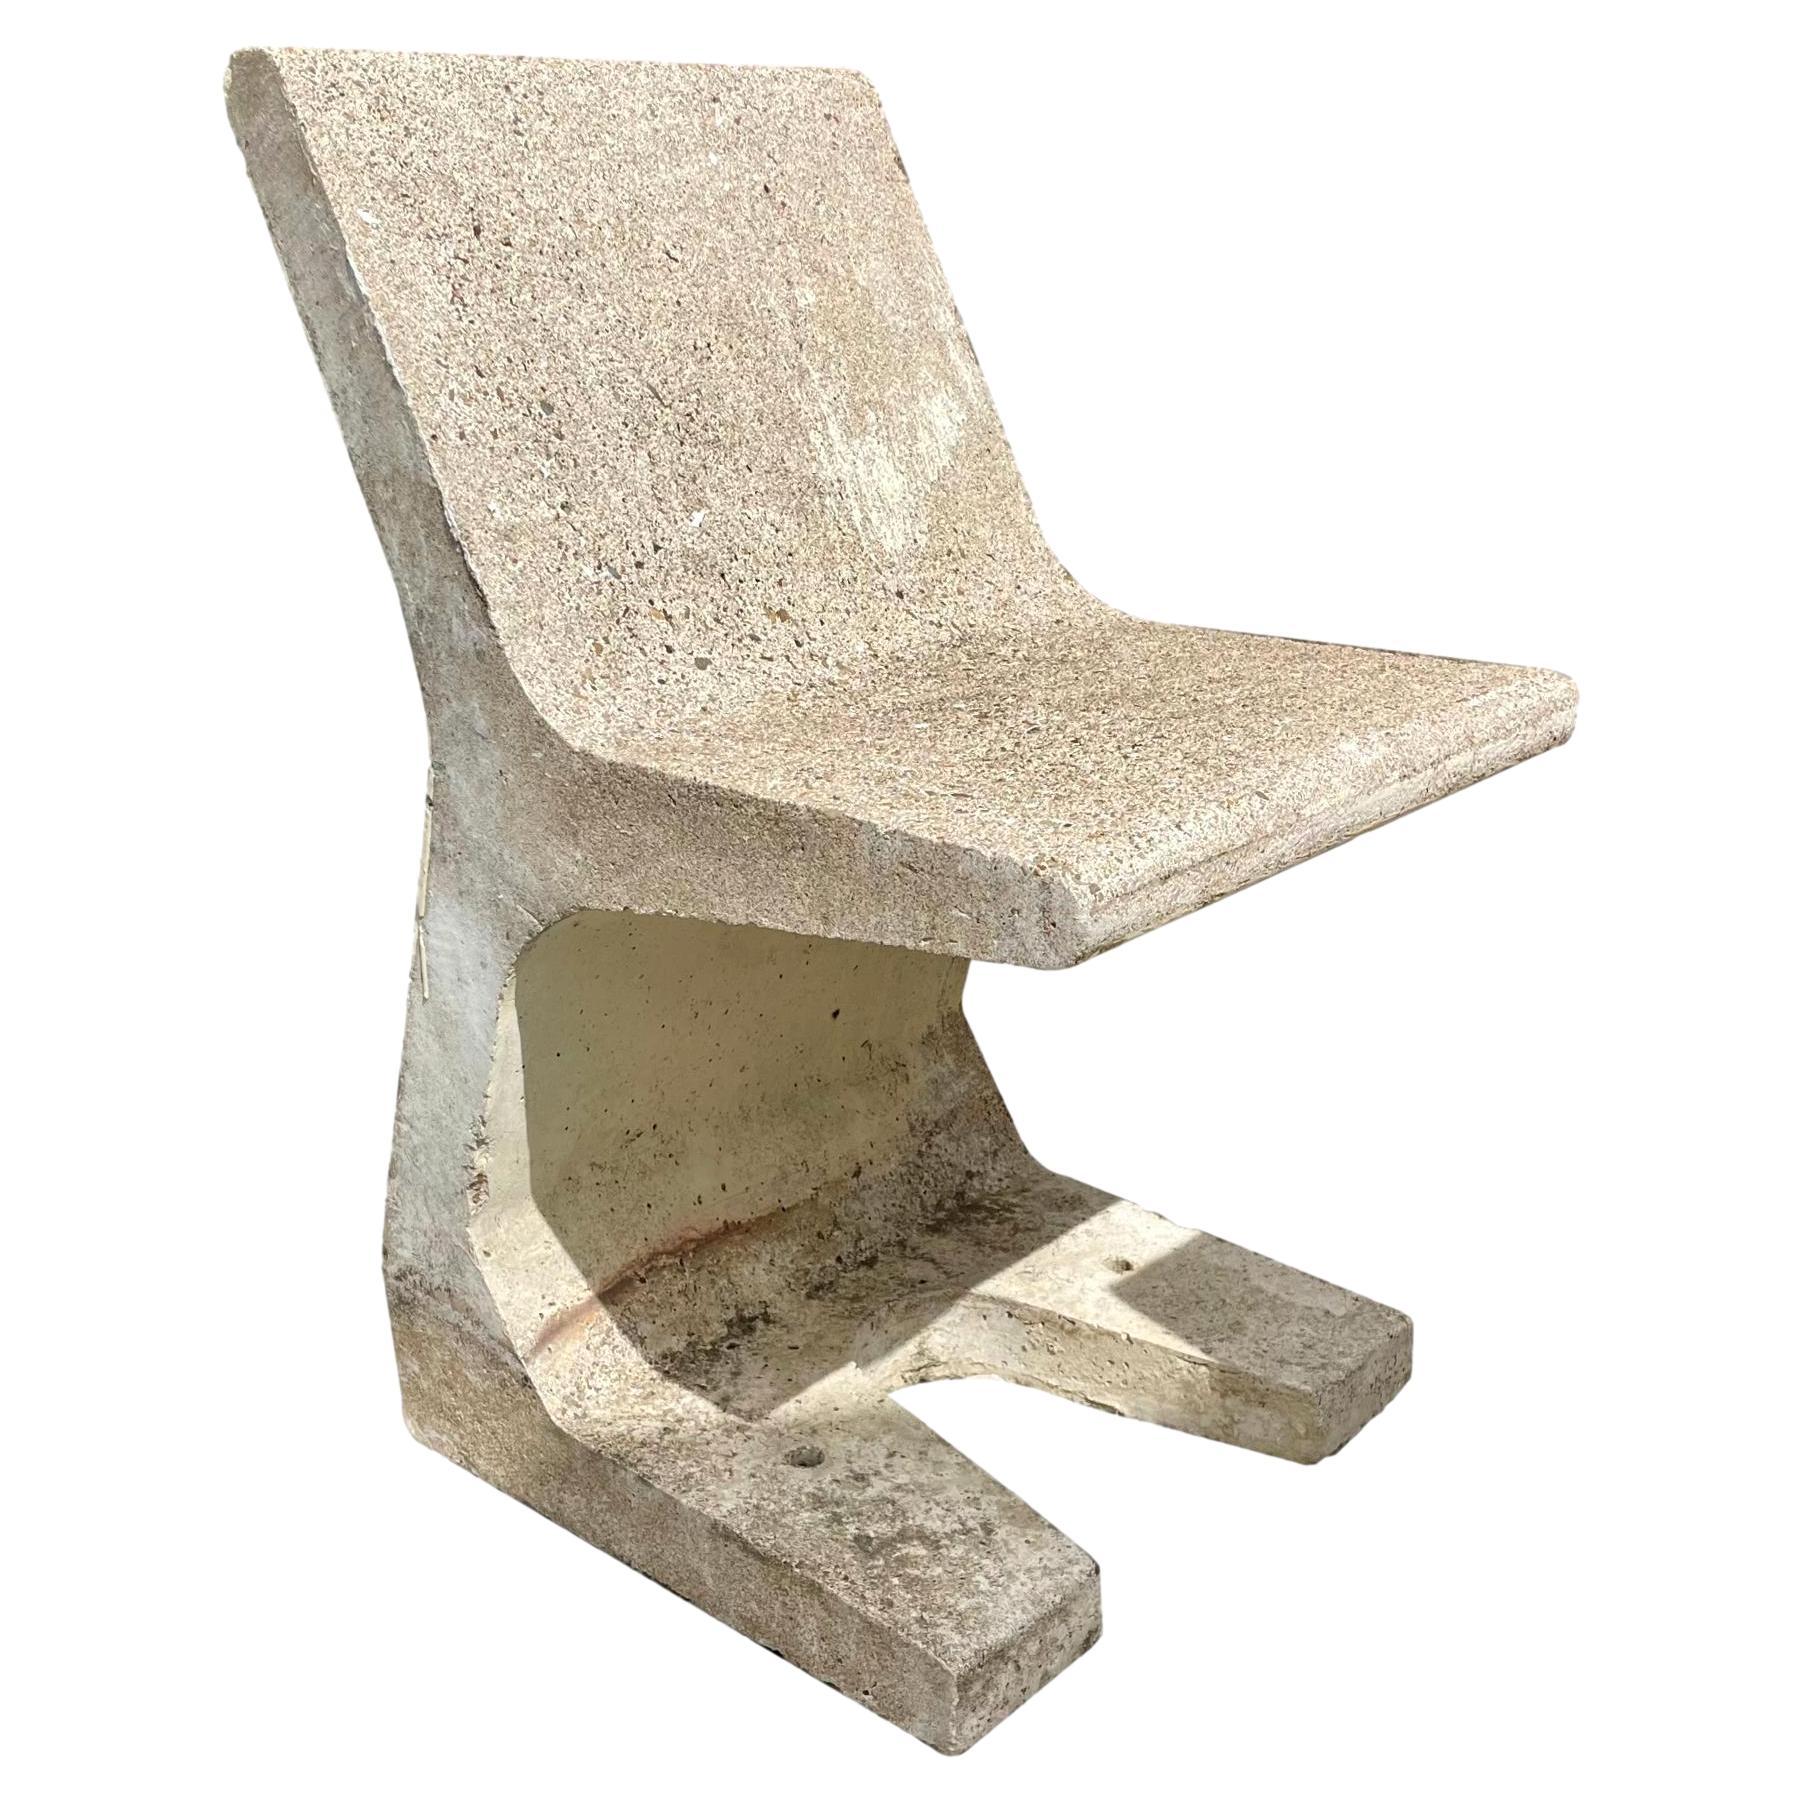 Monumental Concrete Sculptural Chairs, 1970s, France